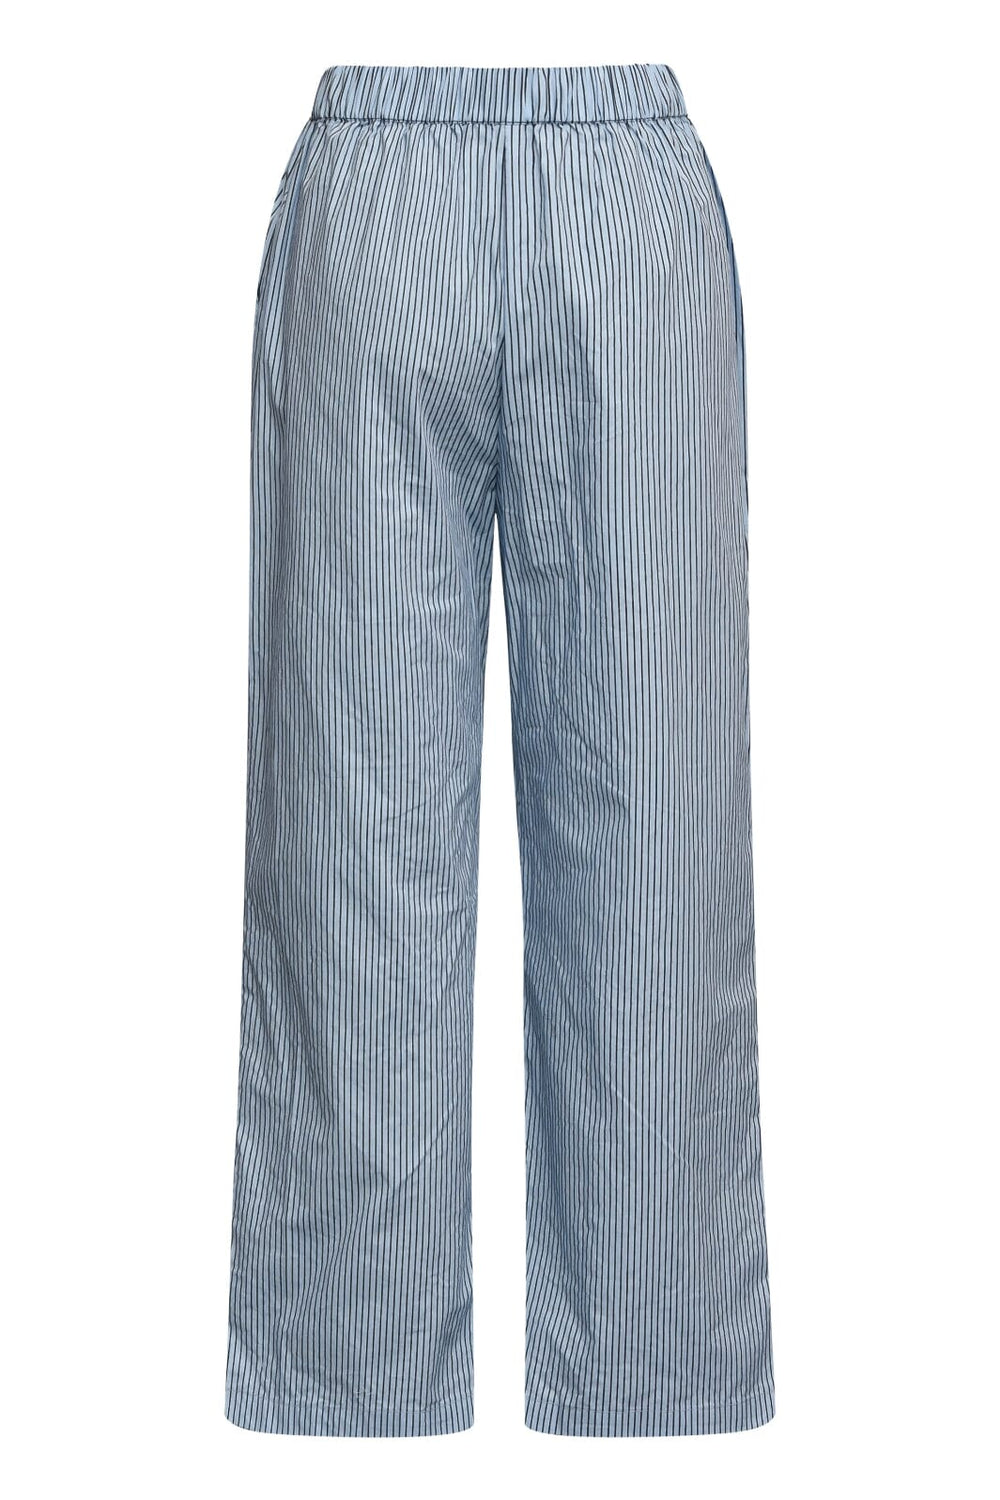 A-VIEW - Brenda Solid Pants - 282 Light Blue Bukser 